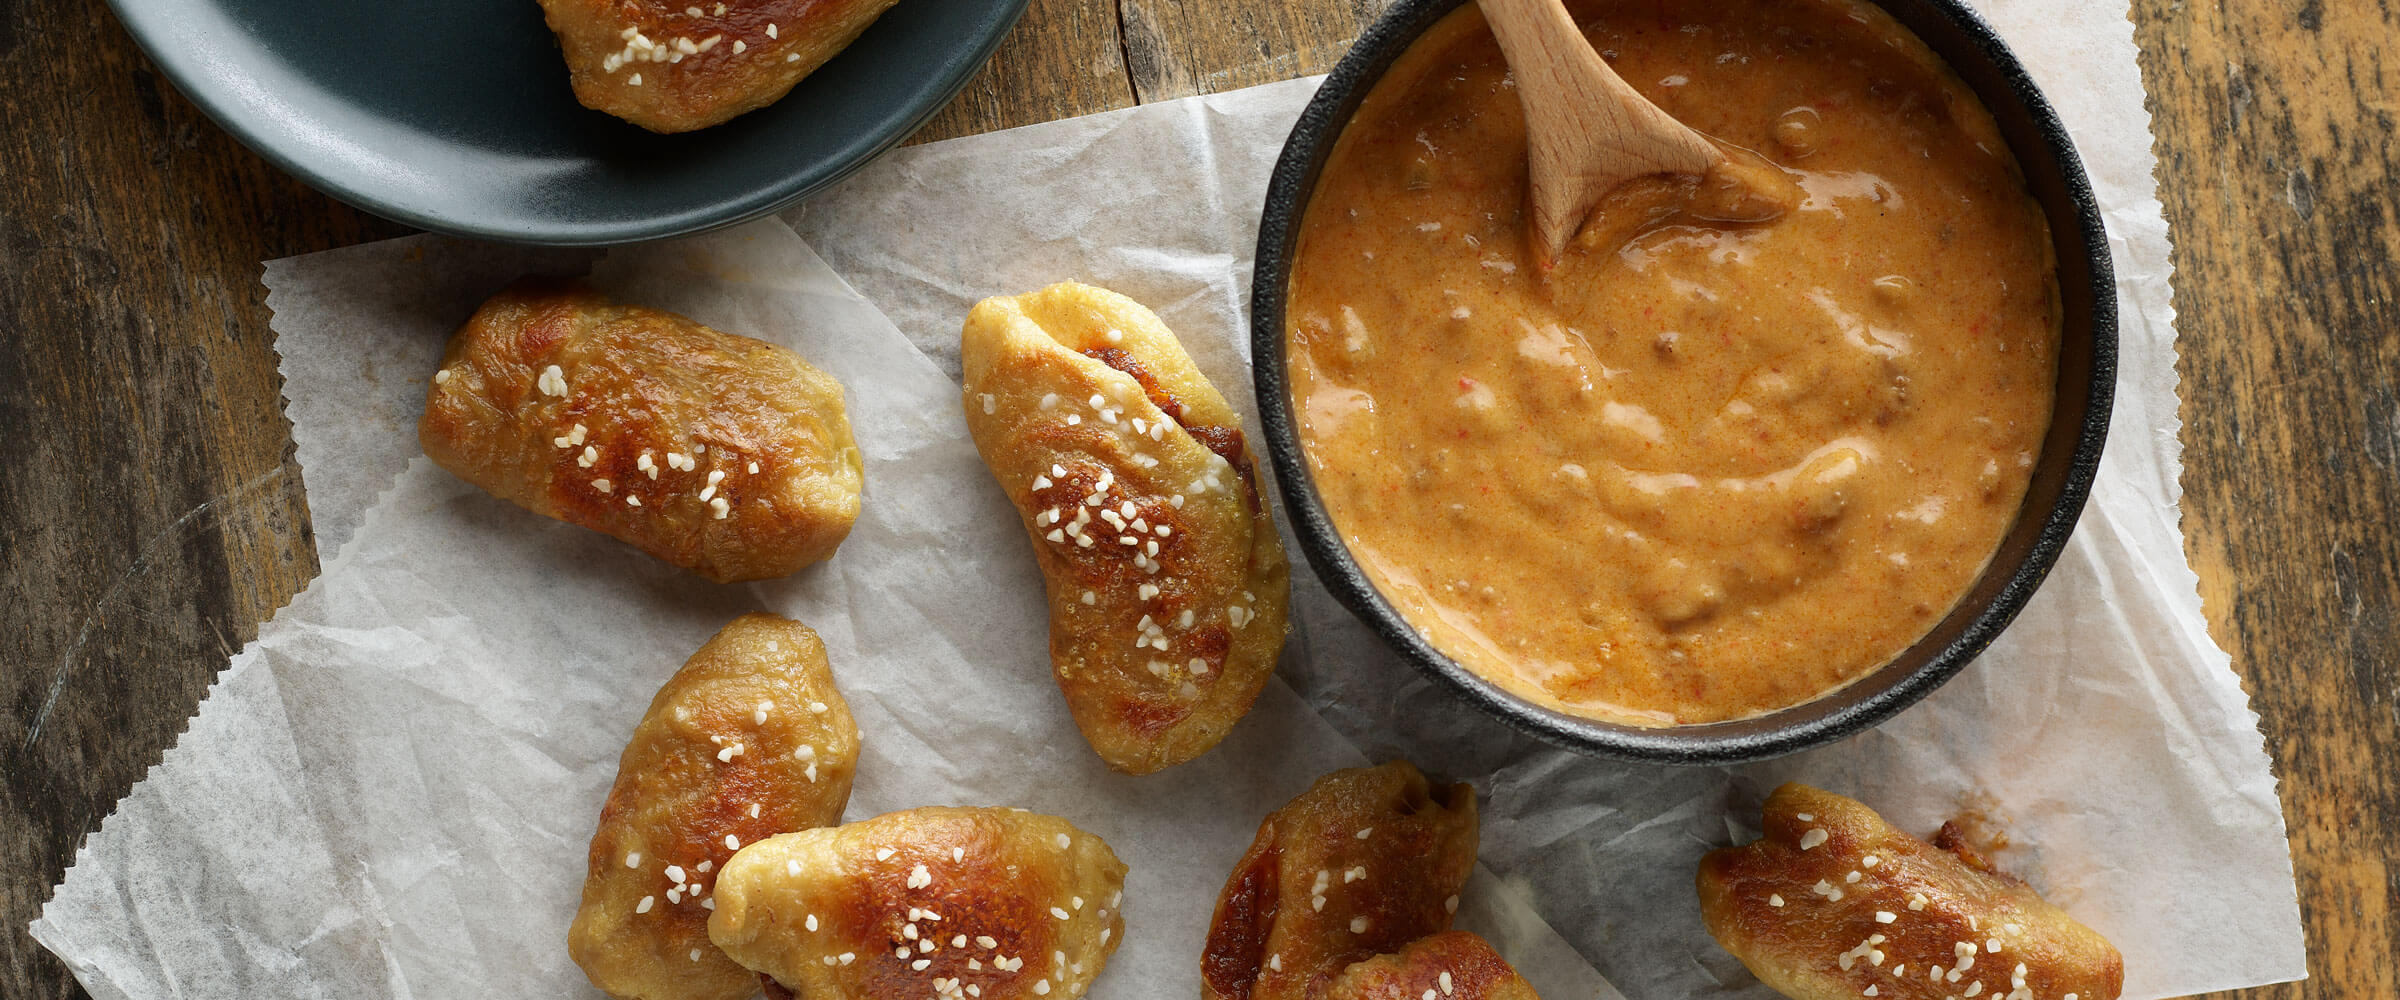 https://www.hormel.com/brands/hormel-chili/wp-content/uploads/sites/4/Recipes_2400_pretzel-bites-with-chili-cheese-sauce.jpg